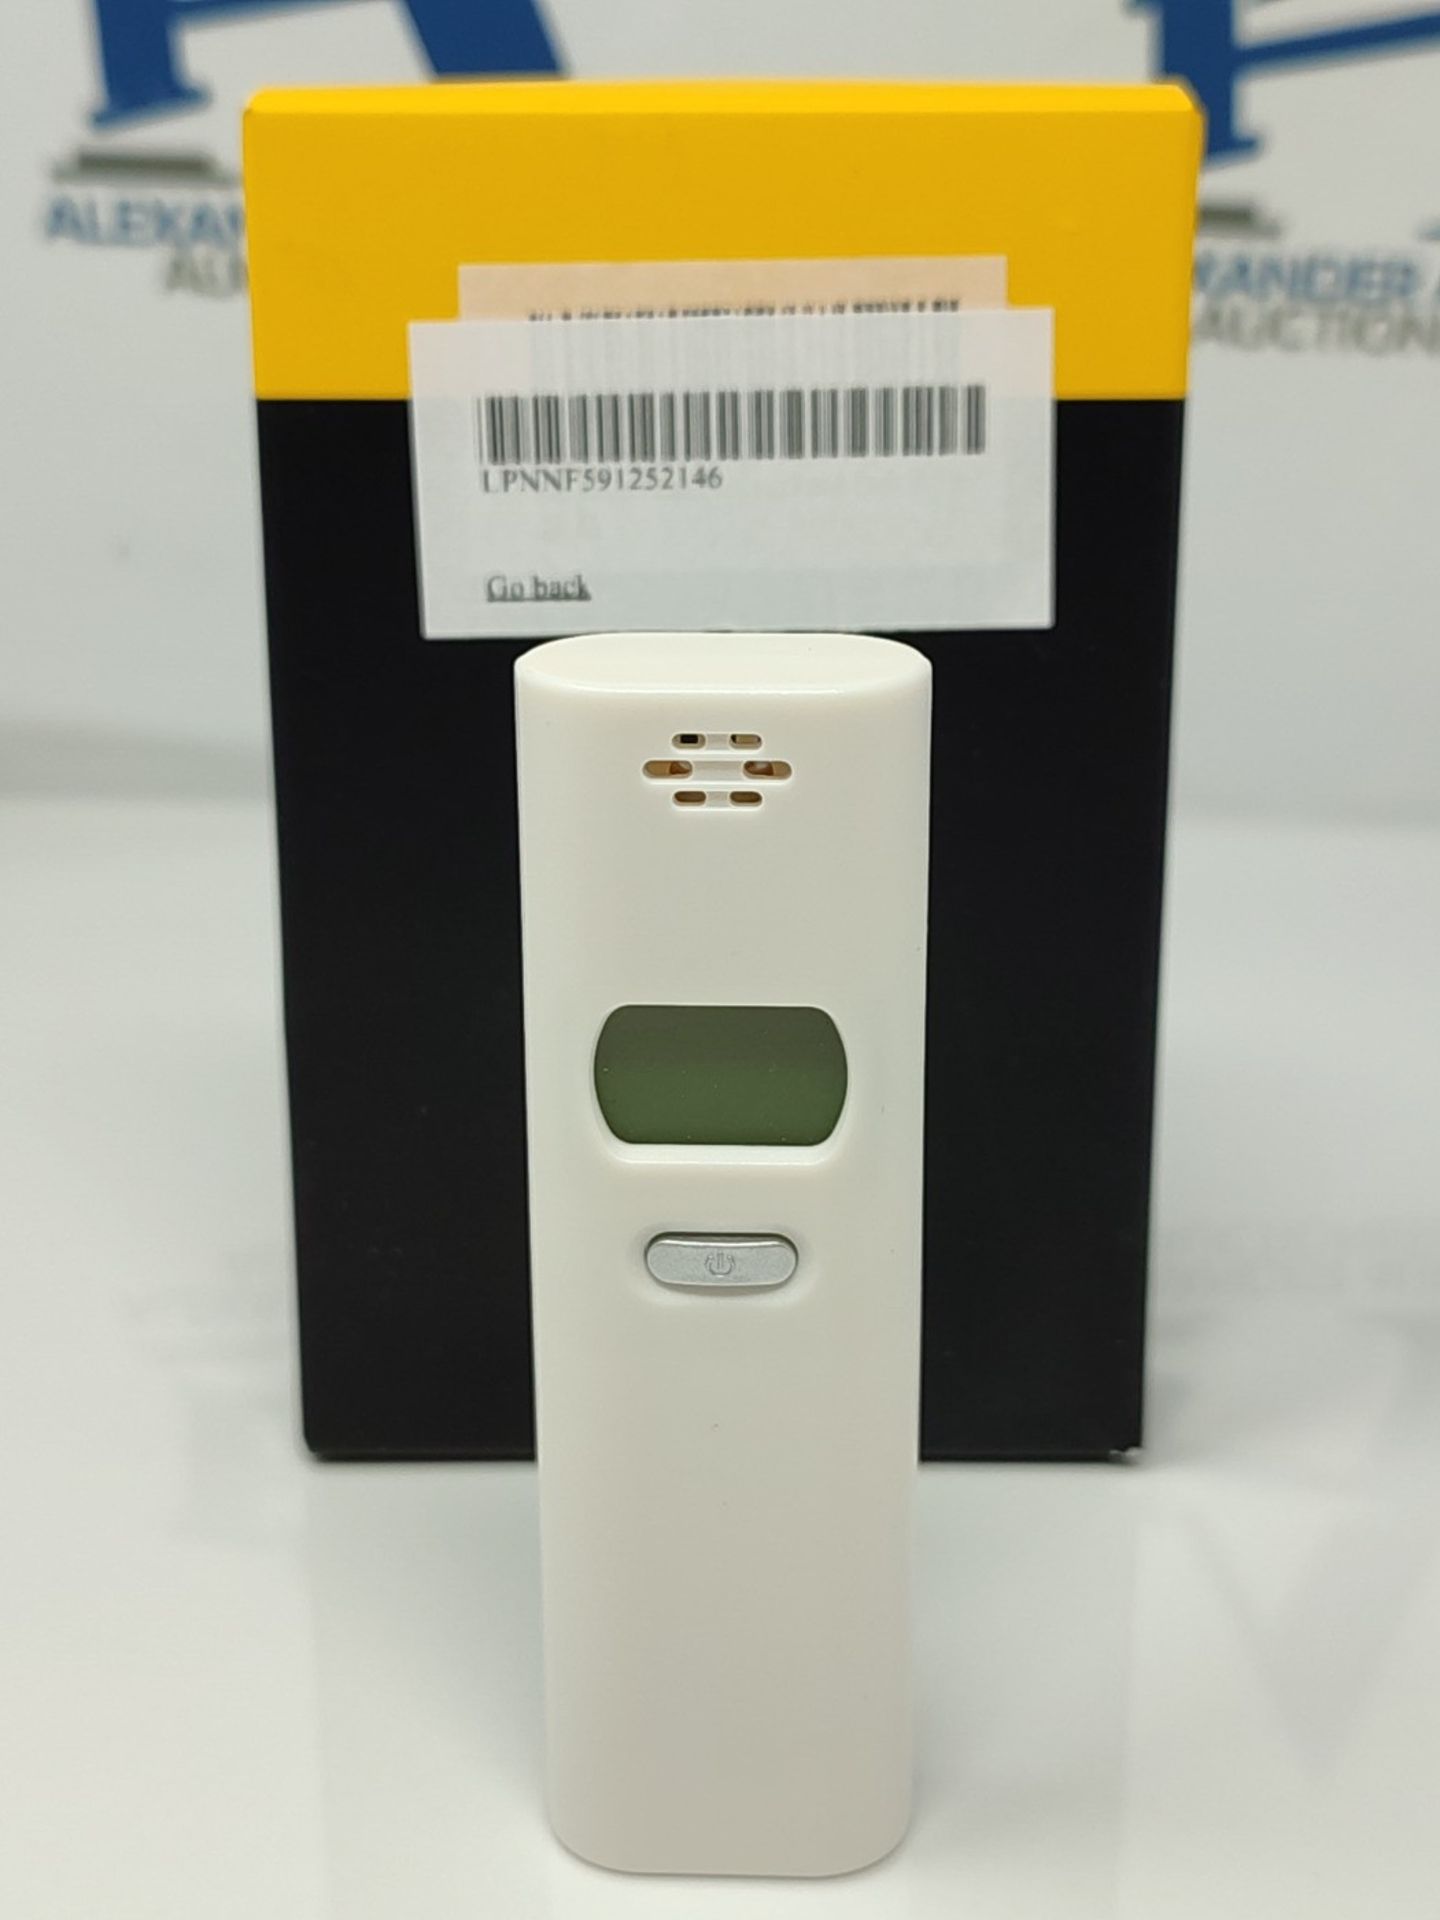 Bad Breath Tester, Portable Oral Odor Analyzer, Oral Health Monitorfor Instant Halitos - Image 2 of 2